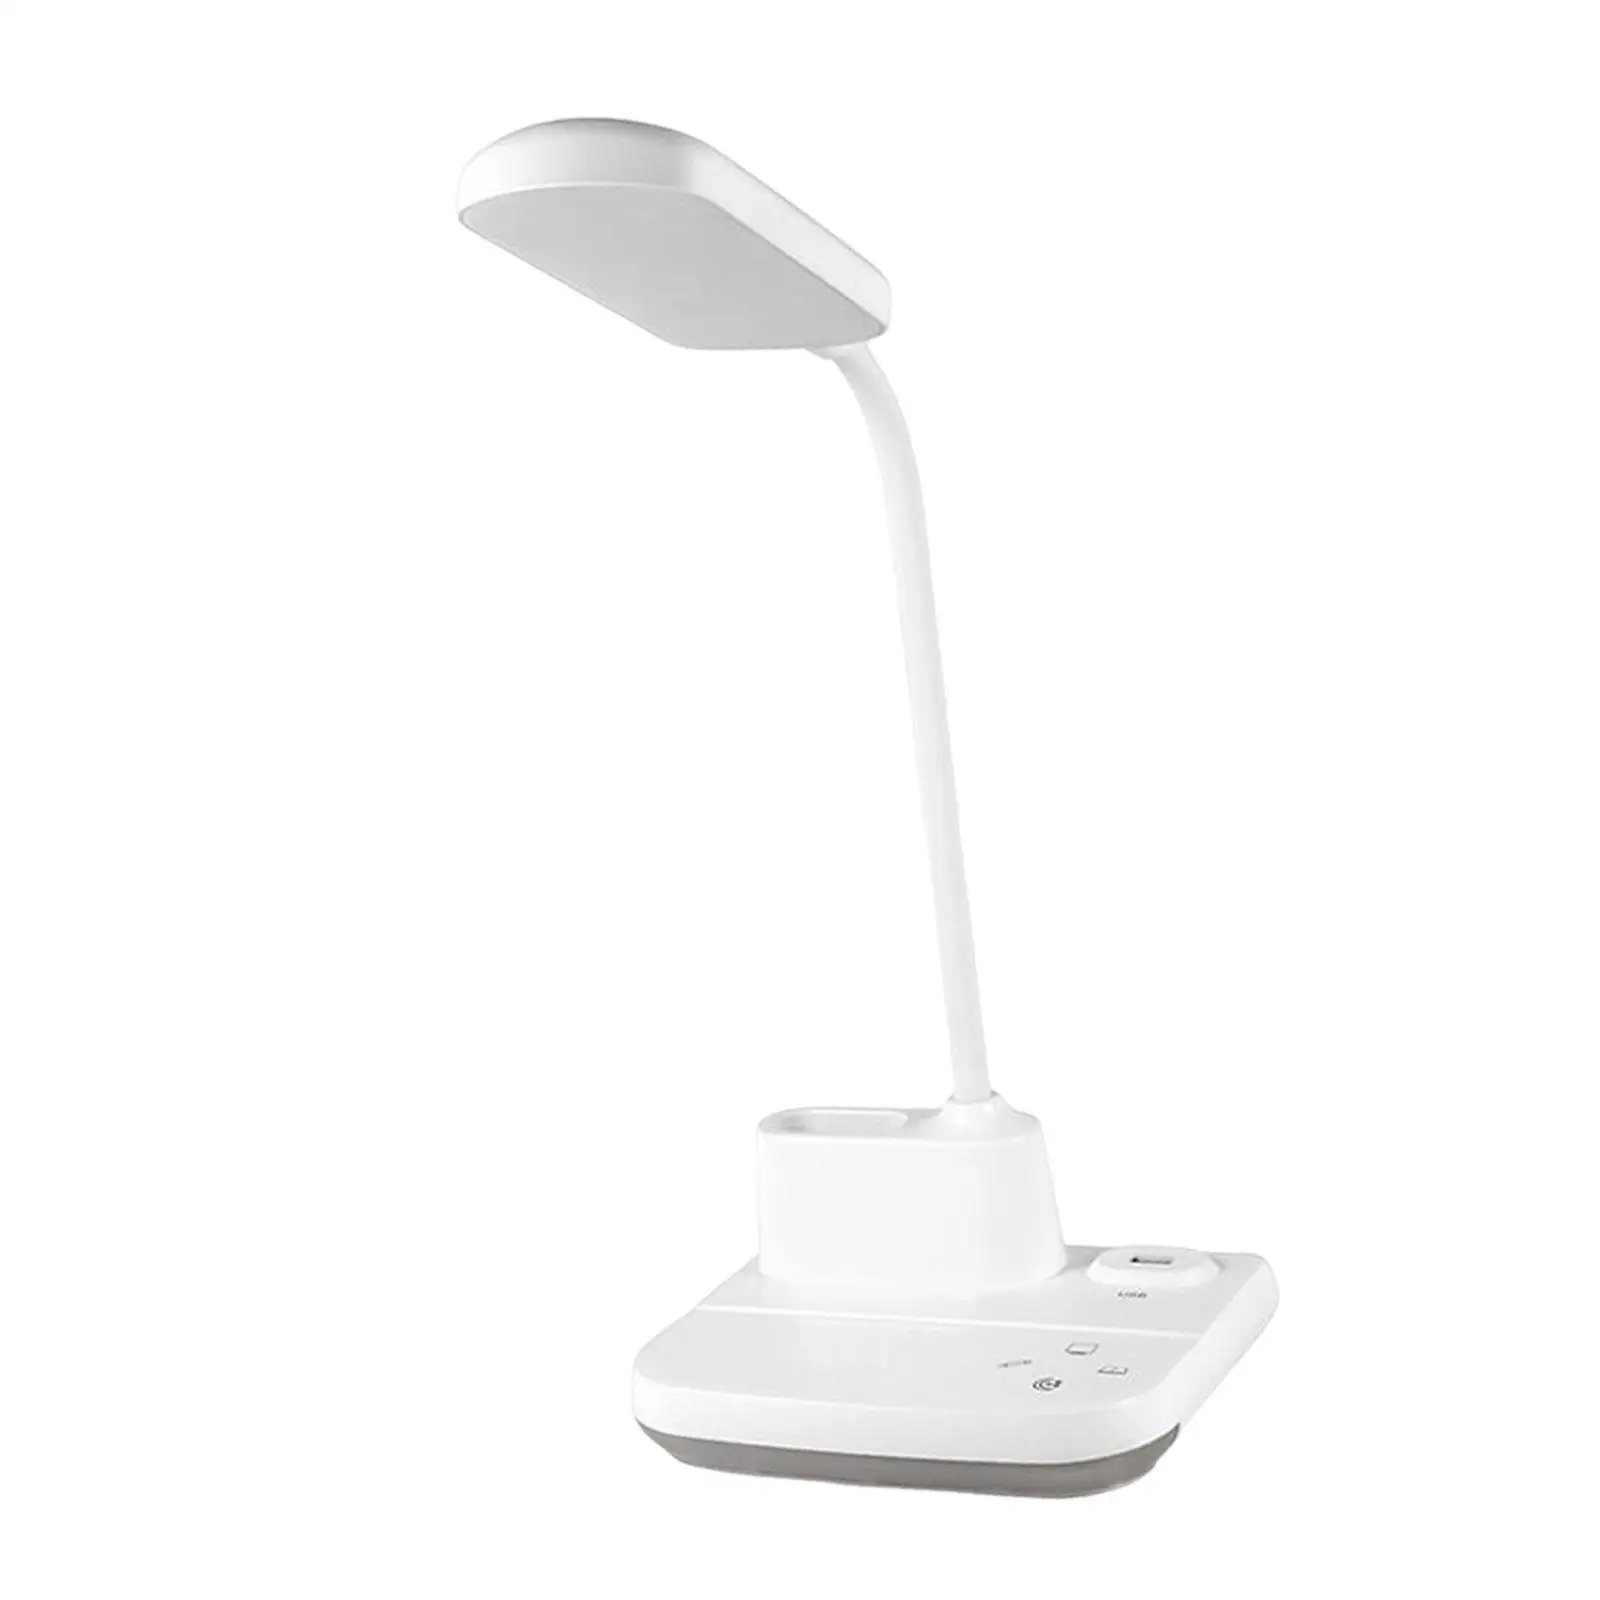 LED Desk Lamp Foldable Dimmable Table Lamp Office Lamp Bedside Reading Light for Desktop Dorm Study Room Bedrooms Home